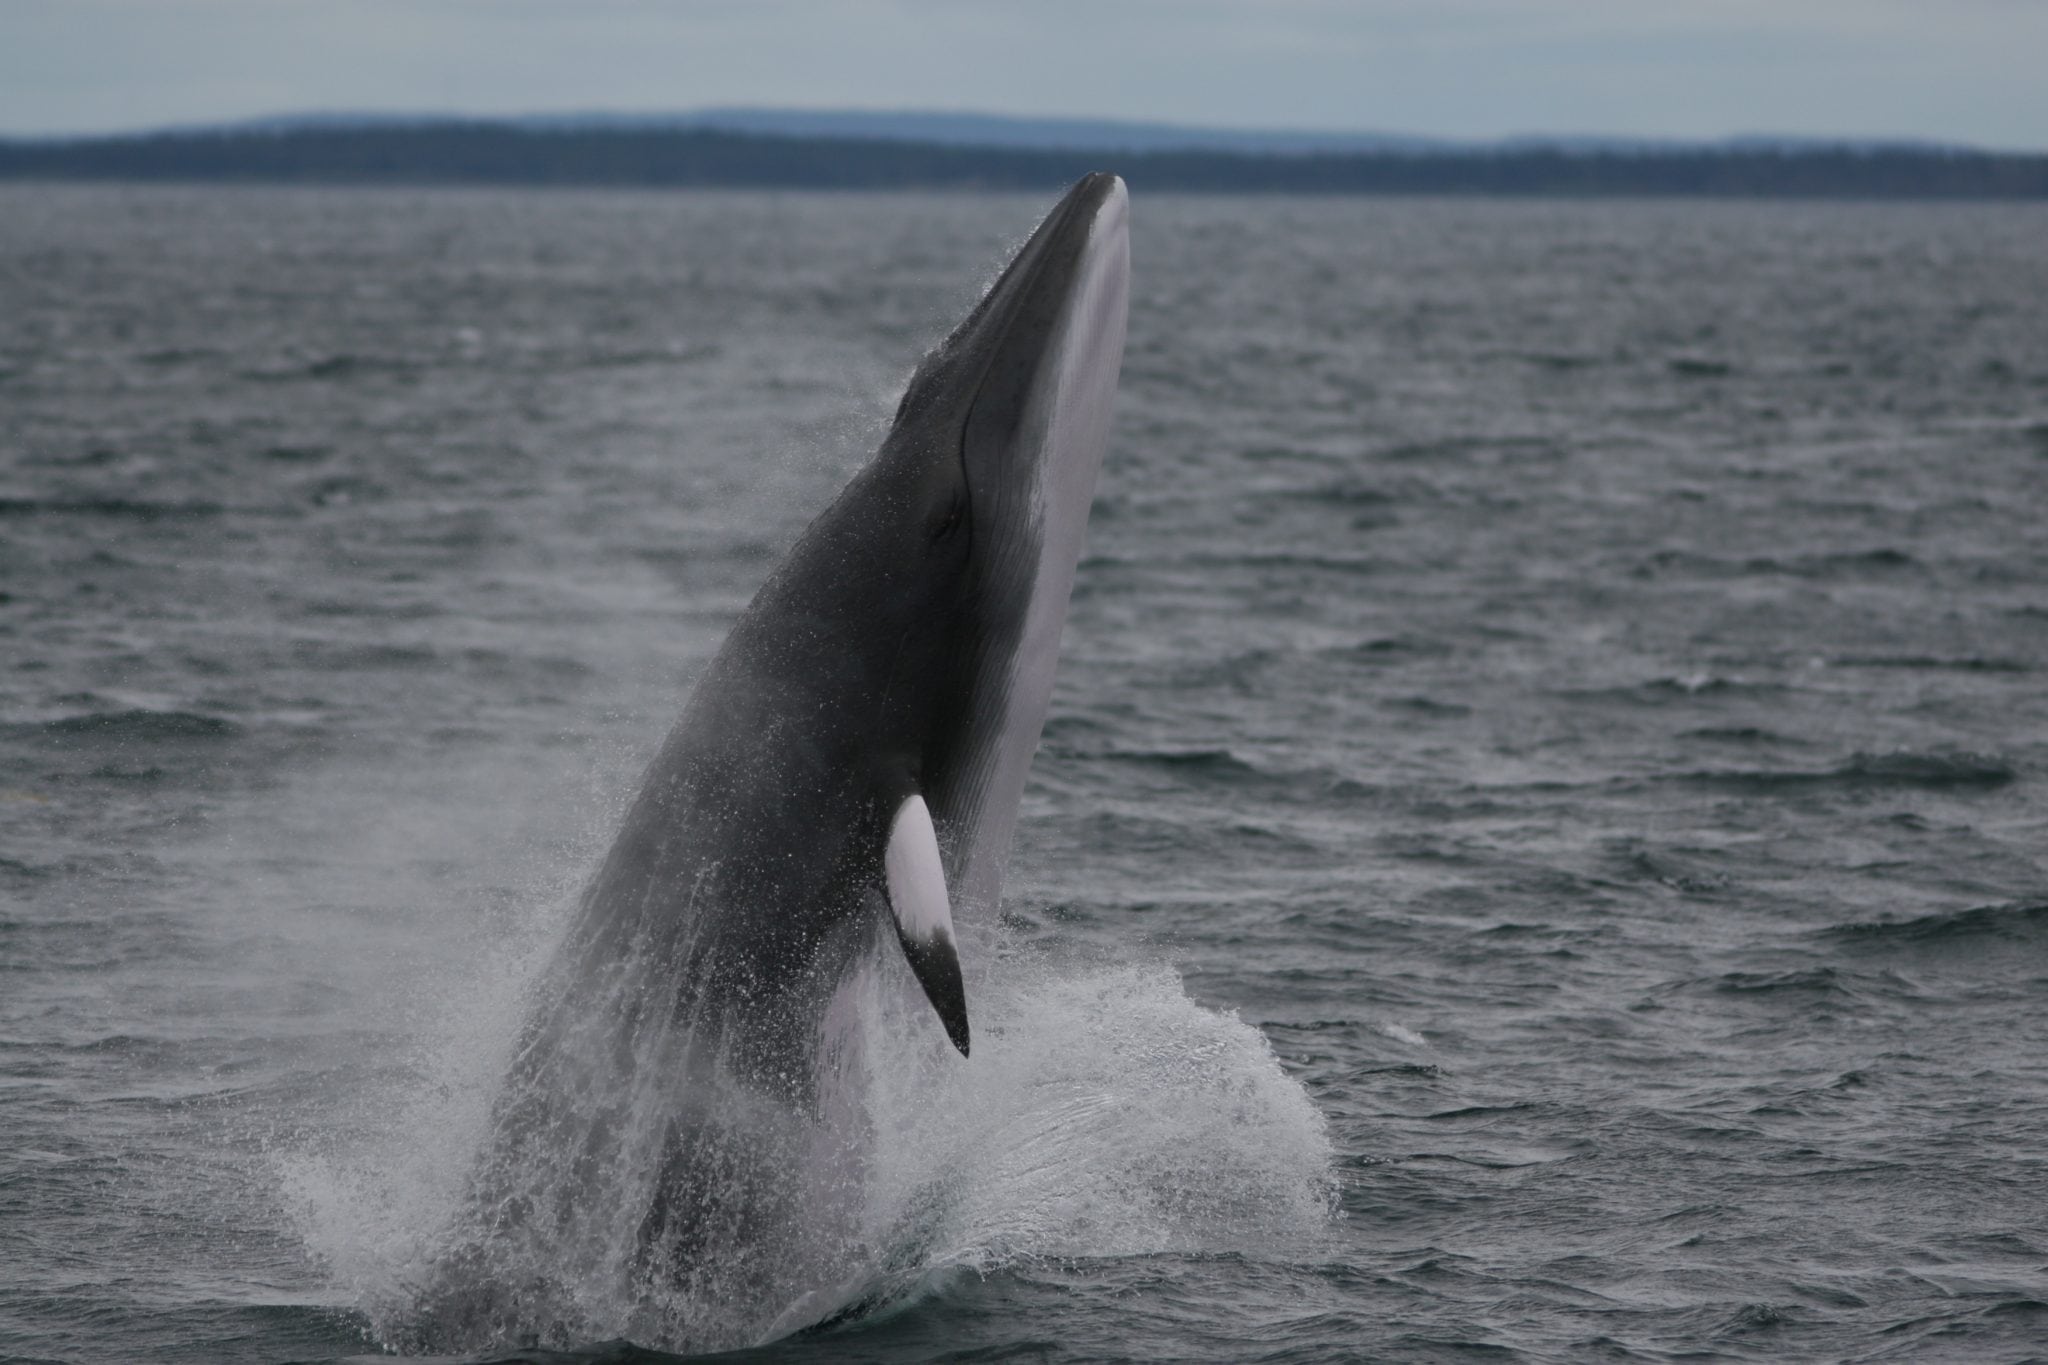 A minke whale breaches